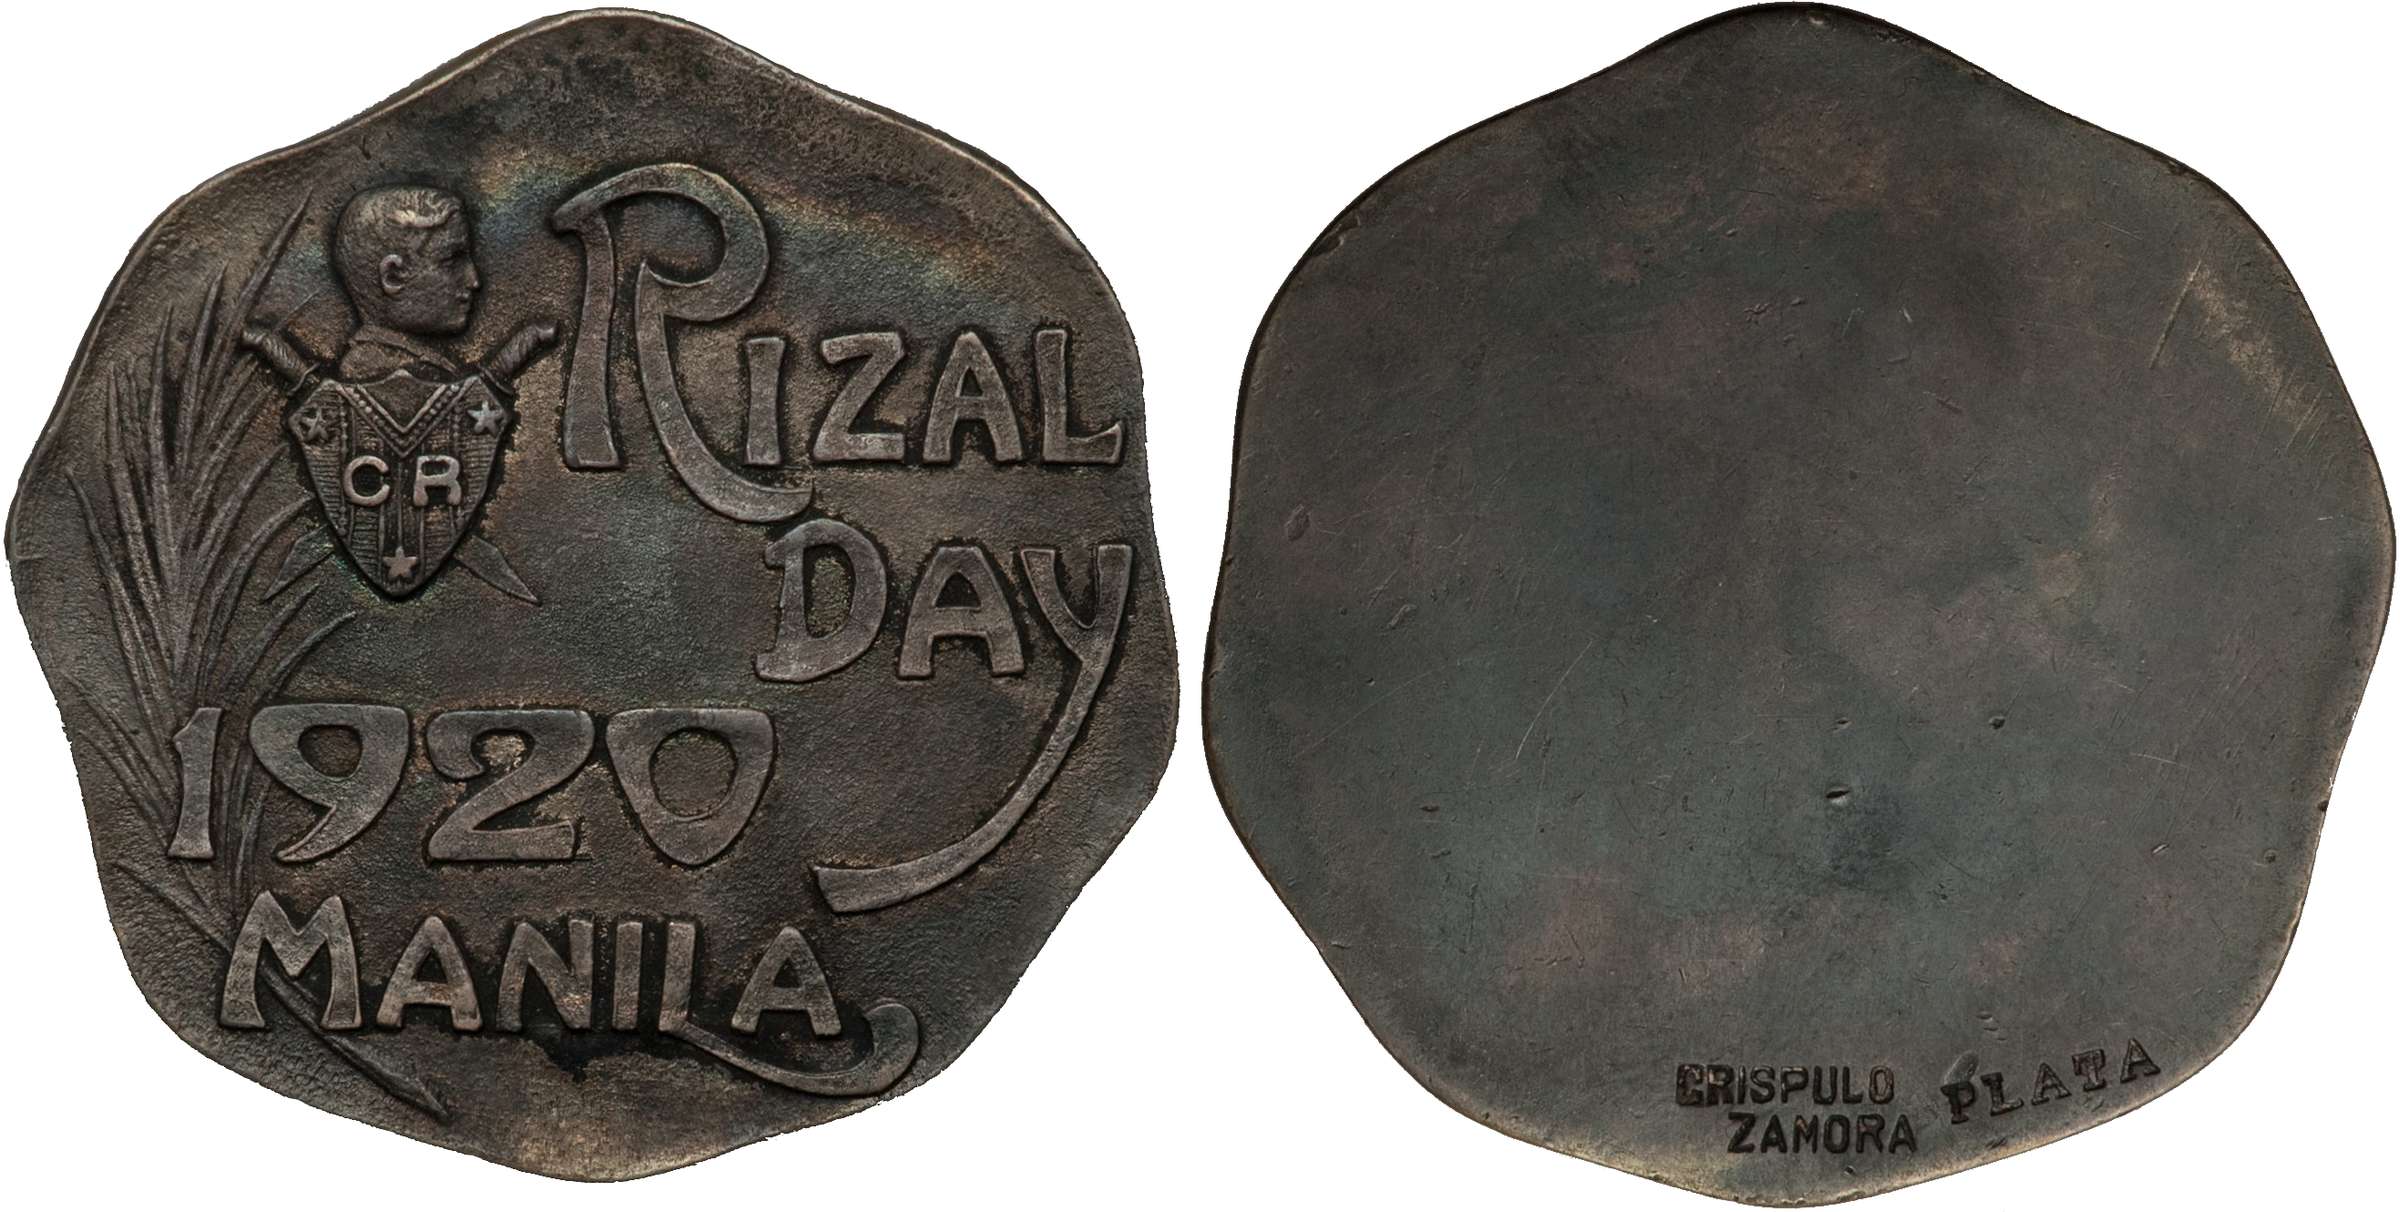 1920 Rizal Day Manila Medal